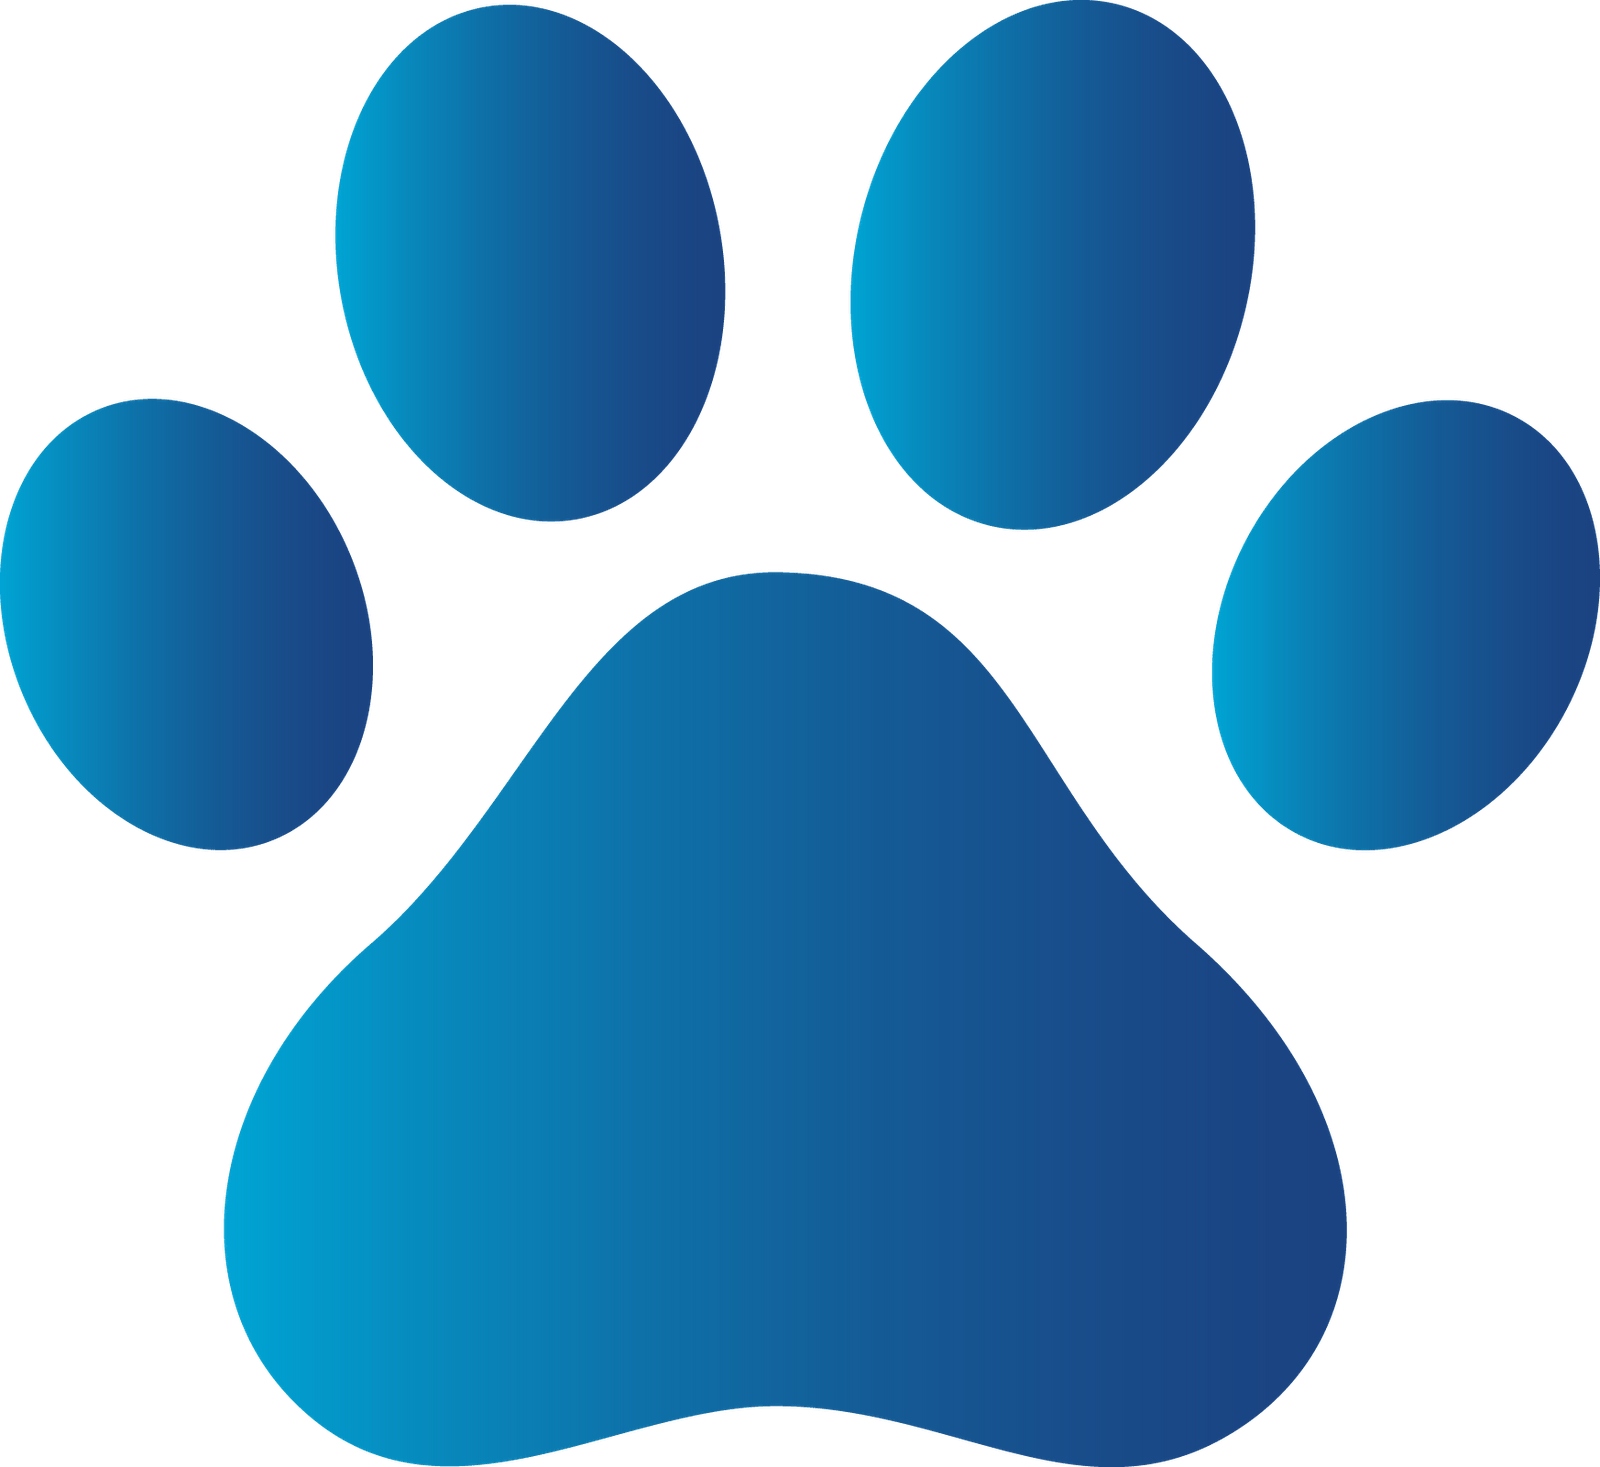 Blue Paw Print Logo - Blue Dog Paw Print Logo free image